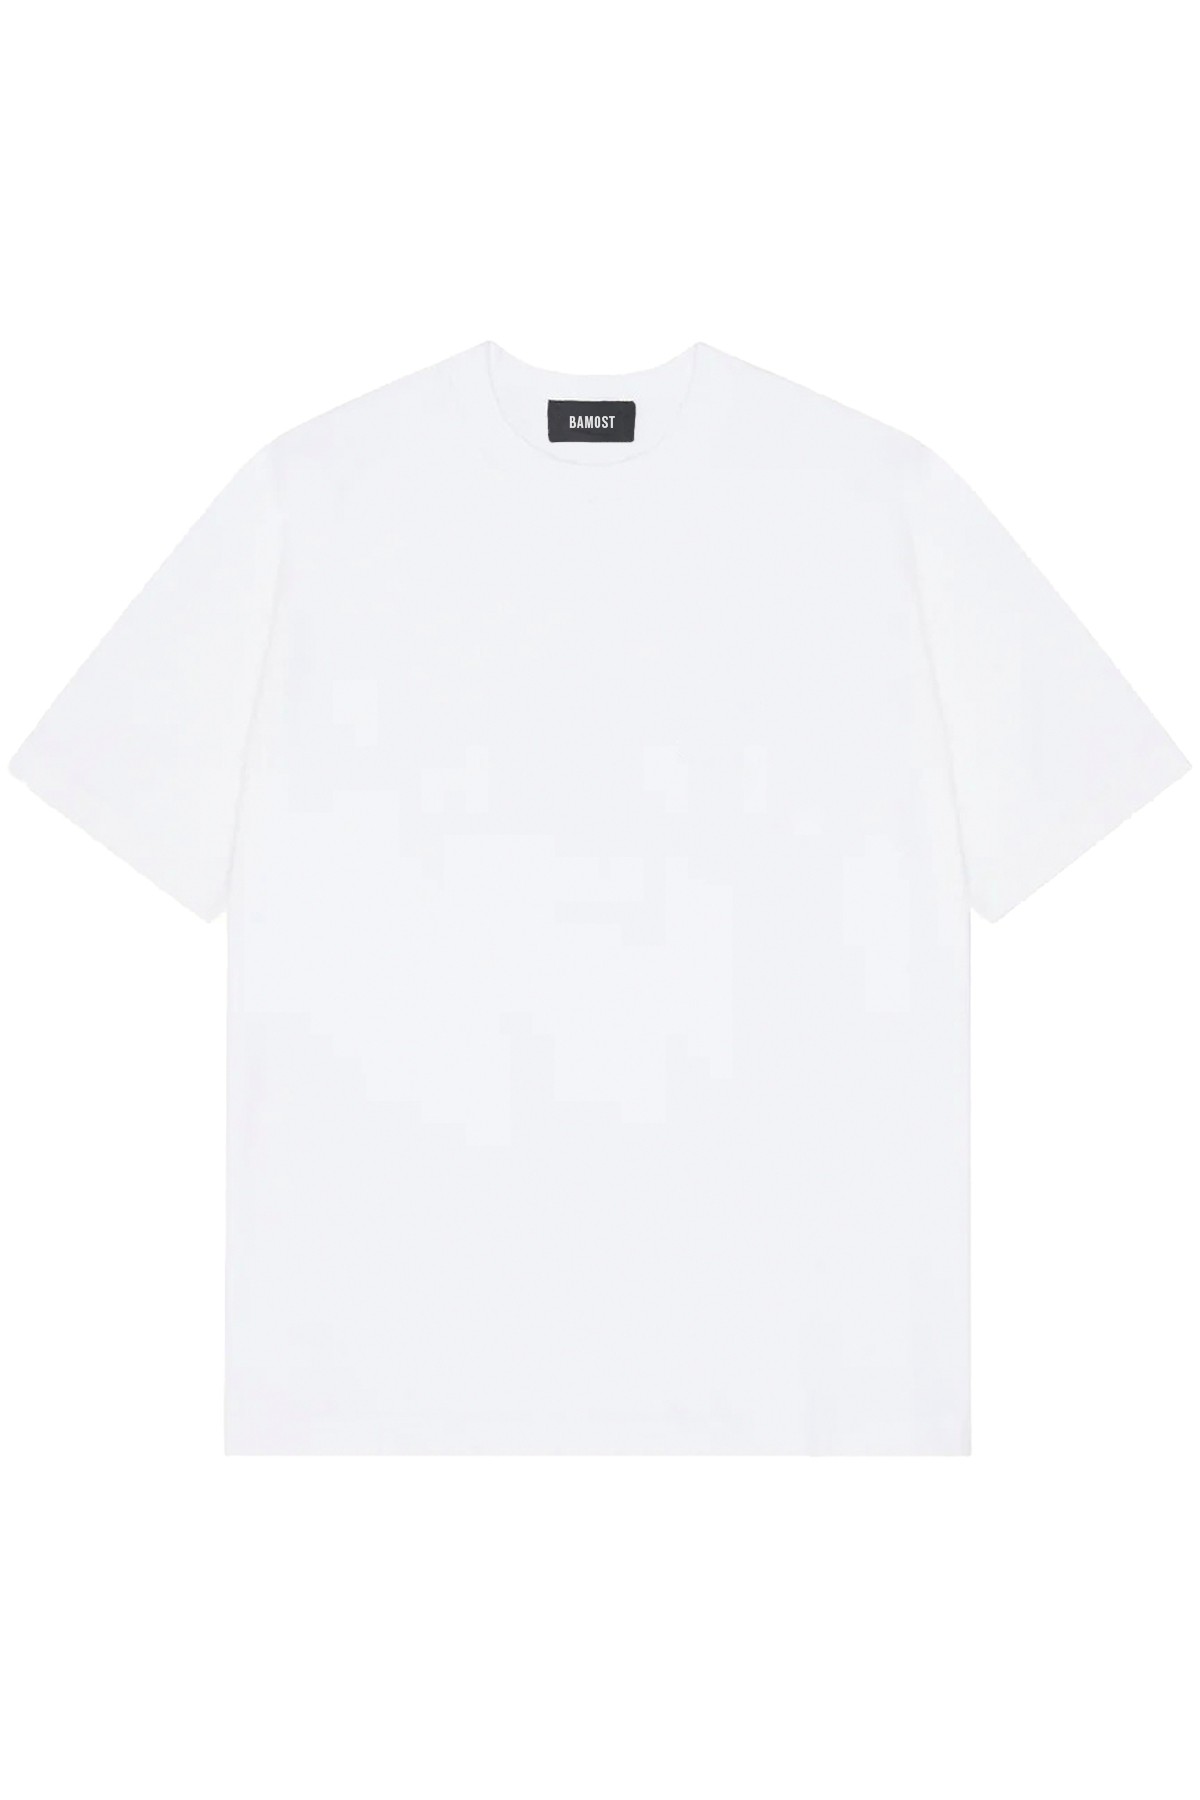 Boris - Comfort Basic T-Shirt - WHITE